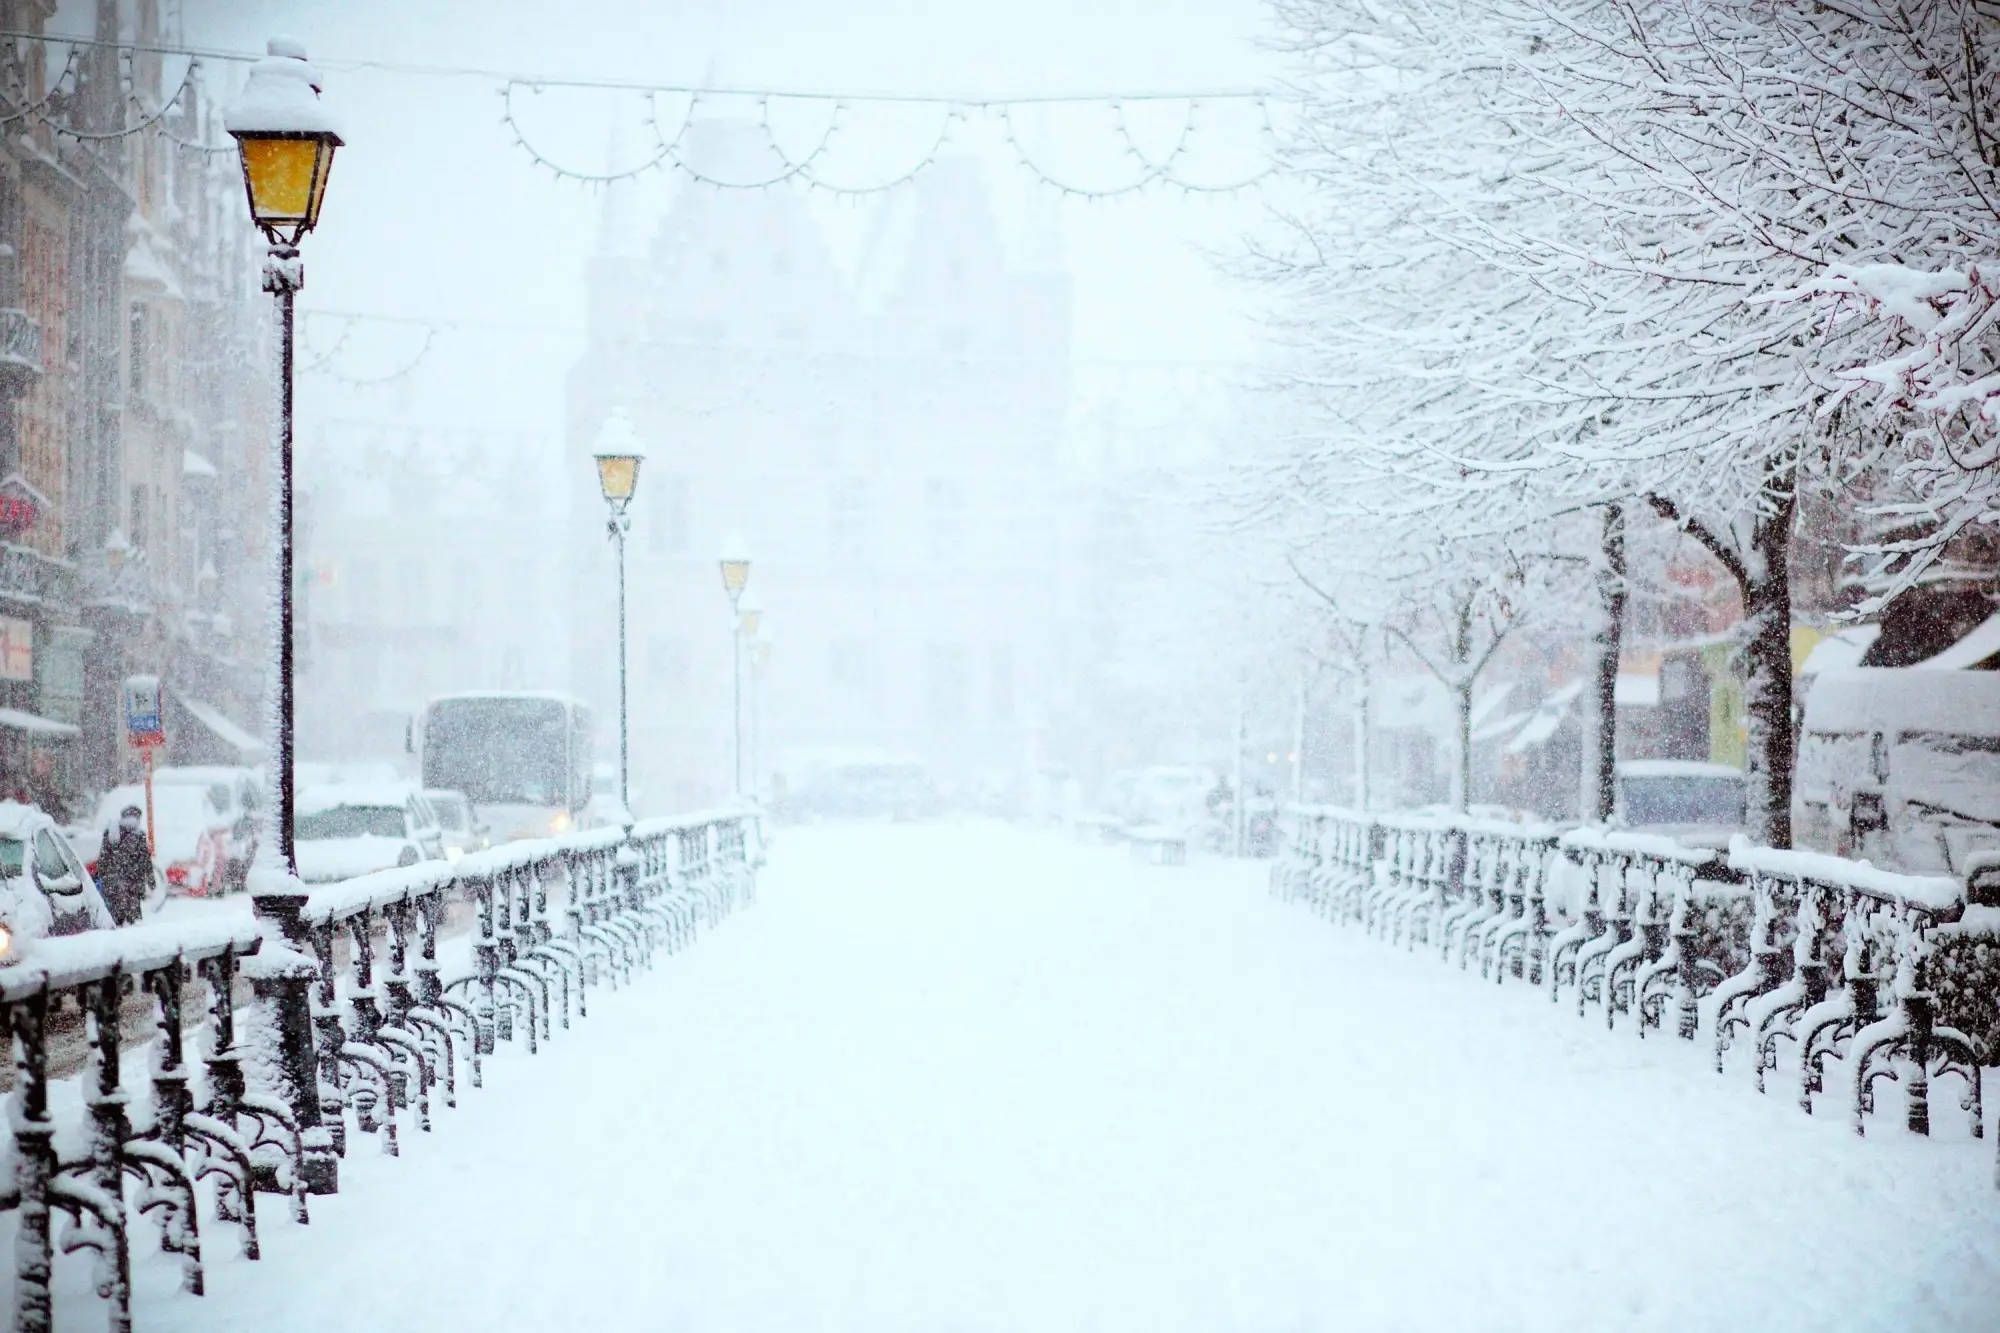 A snowy city street.